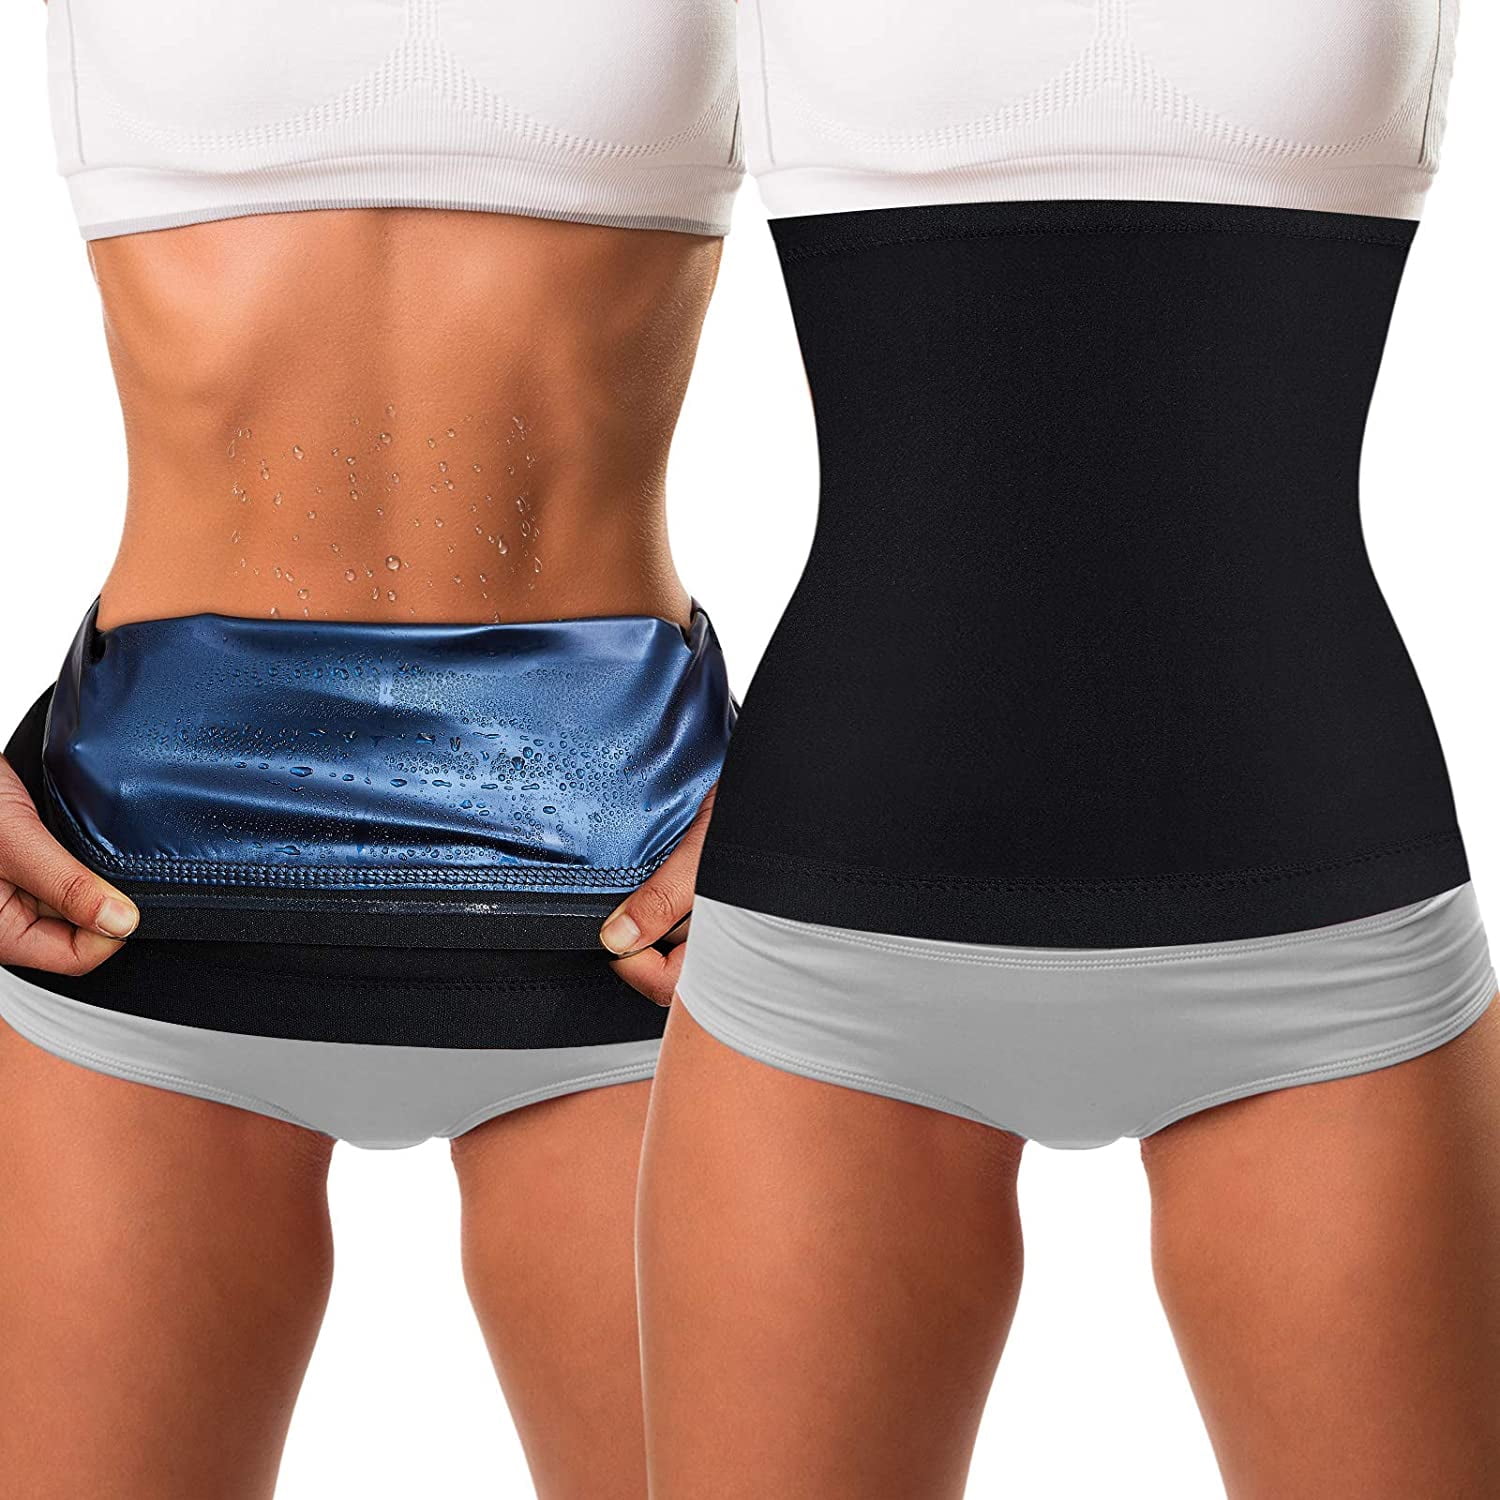 Details about   Men Polymer Sauna Belly Band Belt Body Shaper Slimming Waist Trainer Girdle Fat 